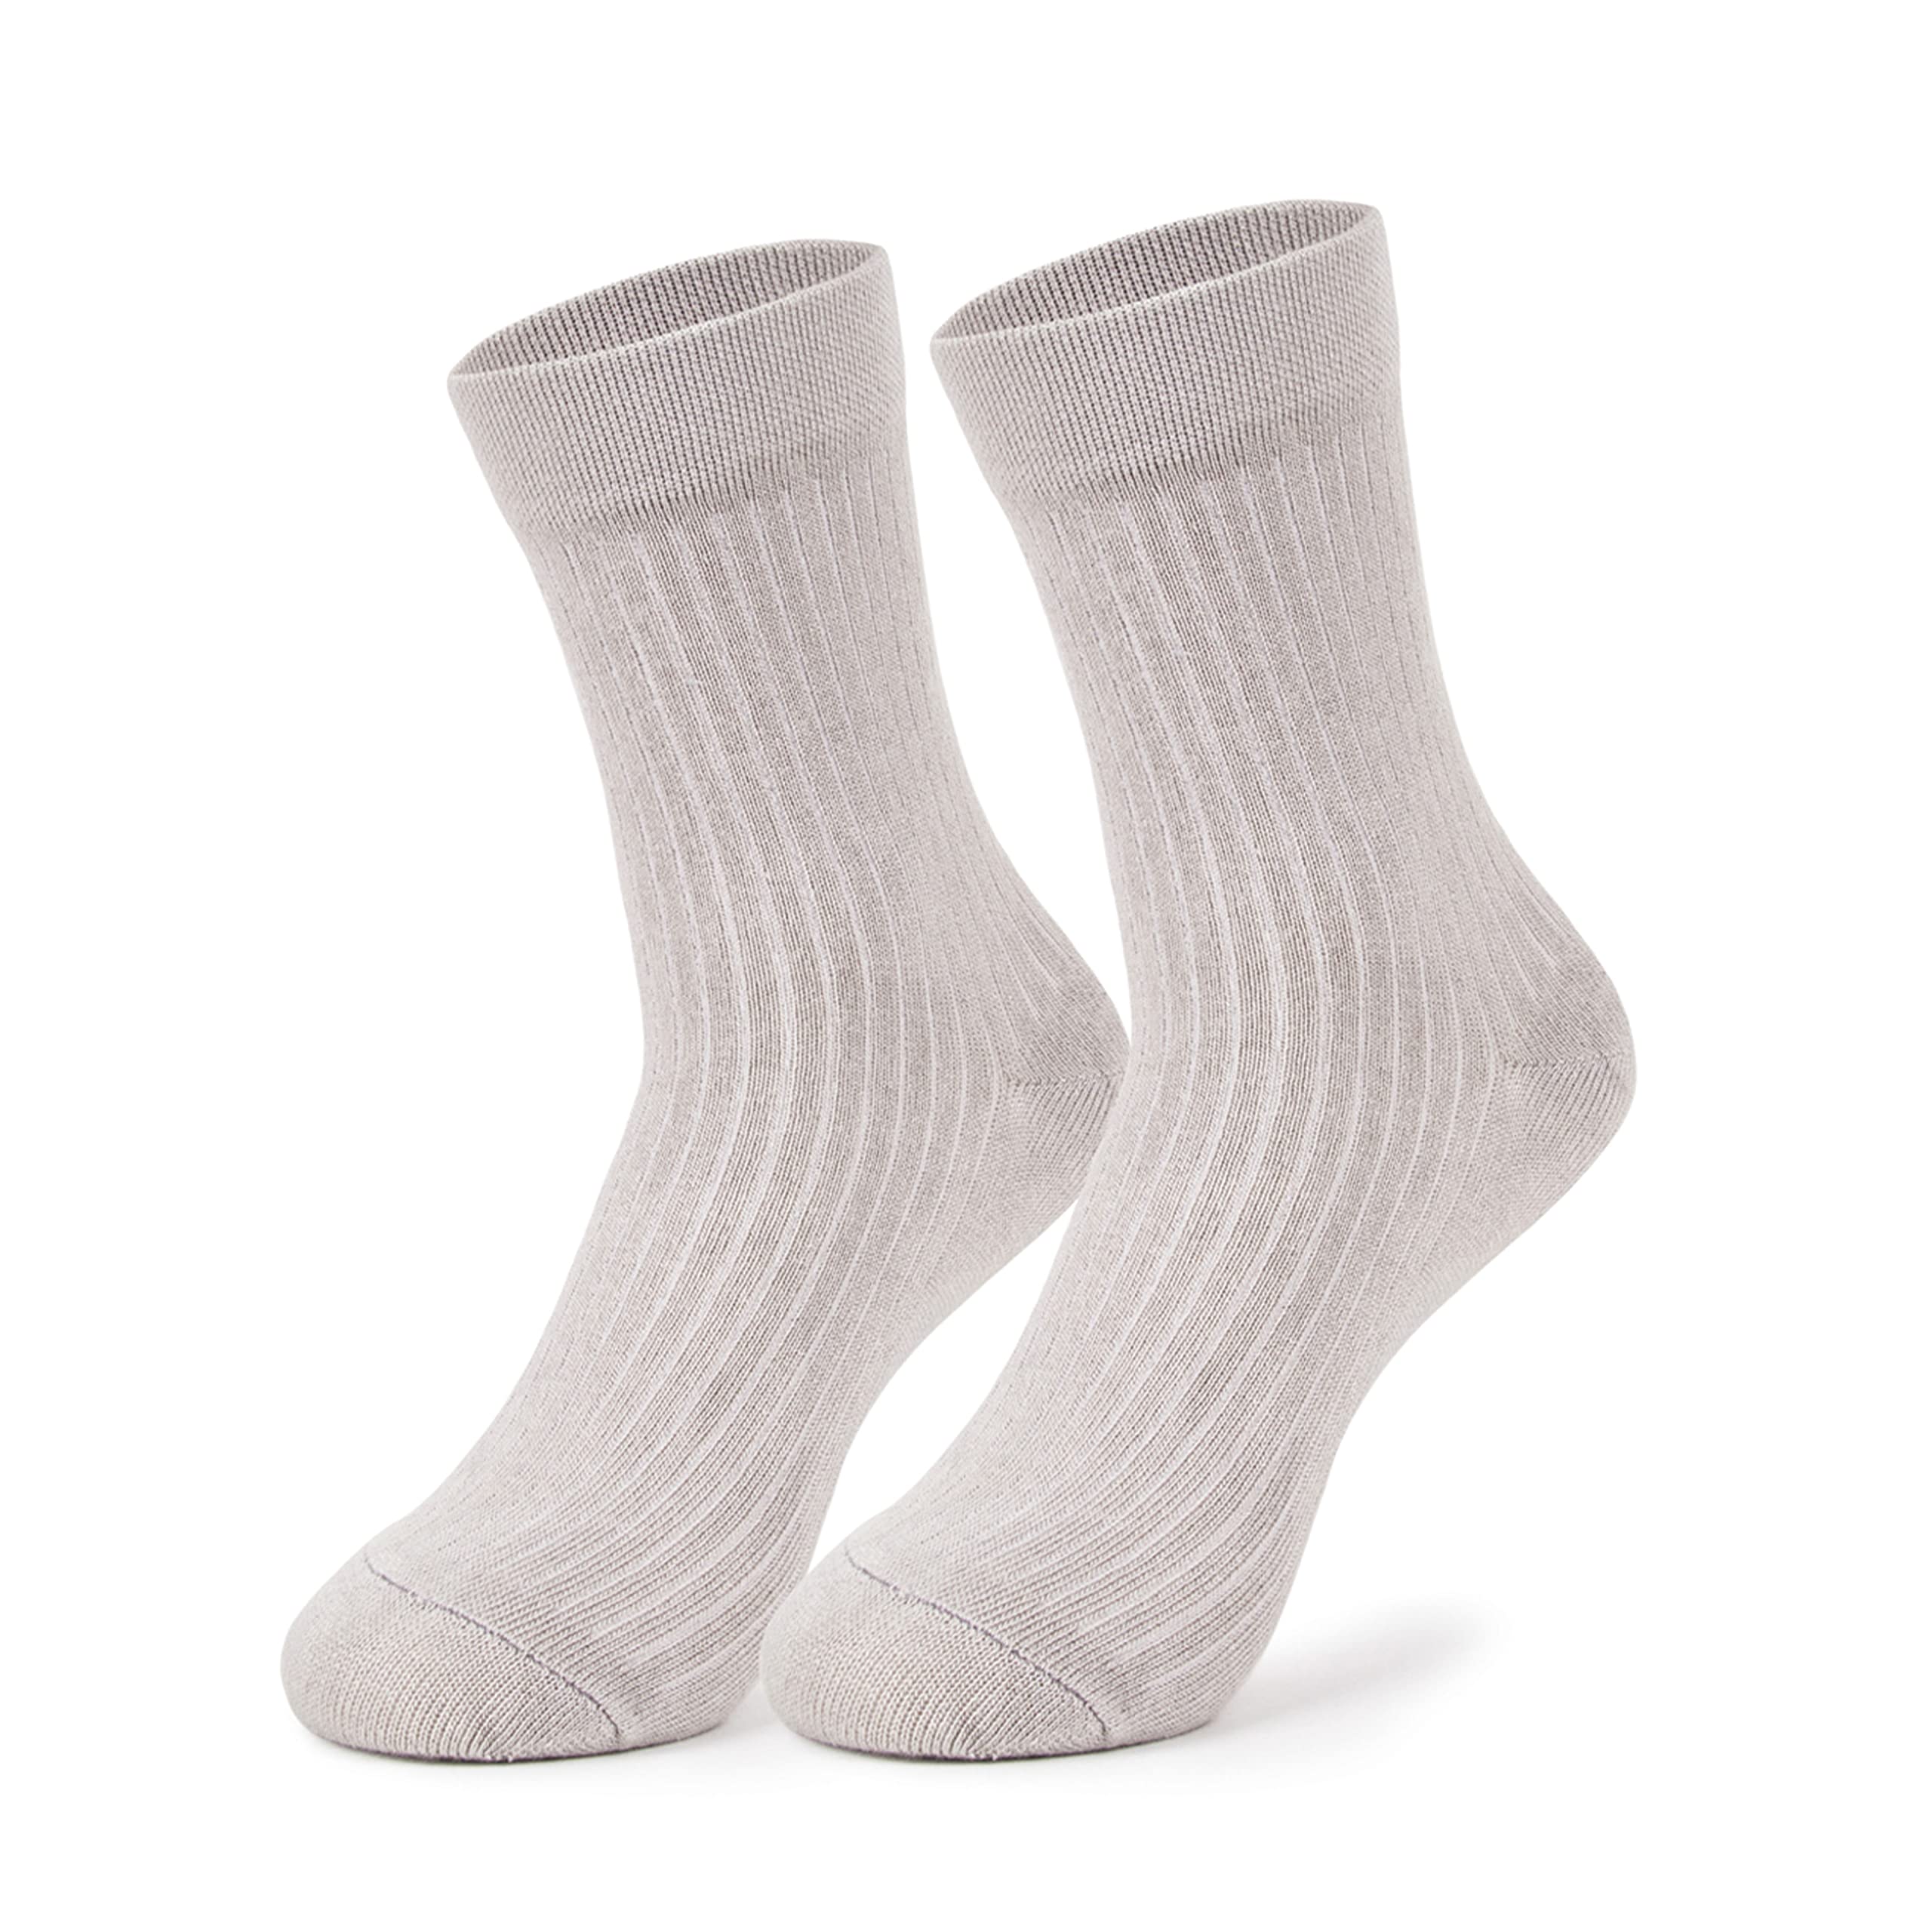 Mush Ultra-Soft, Odorless, Breathable Bamboo Calf Length Formal Socks (Light Grey, 3)